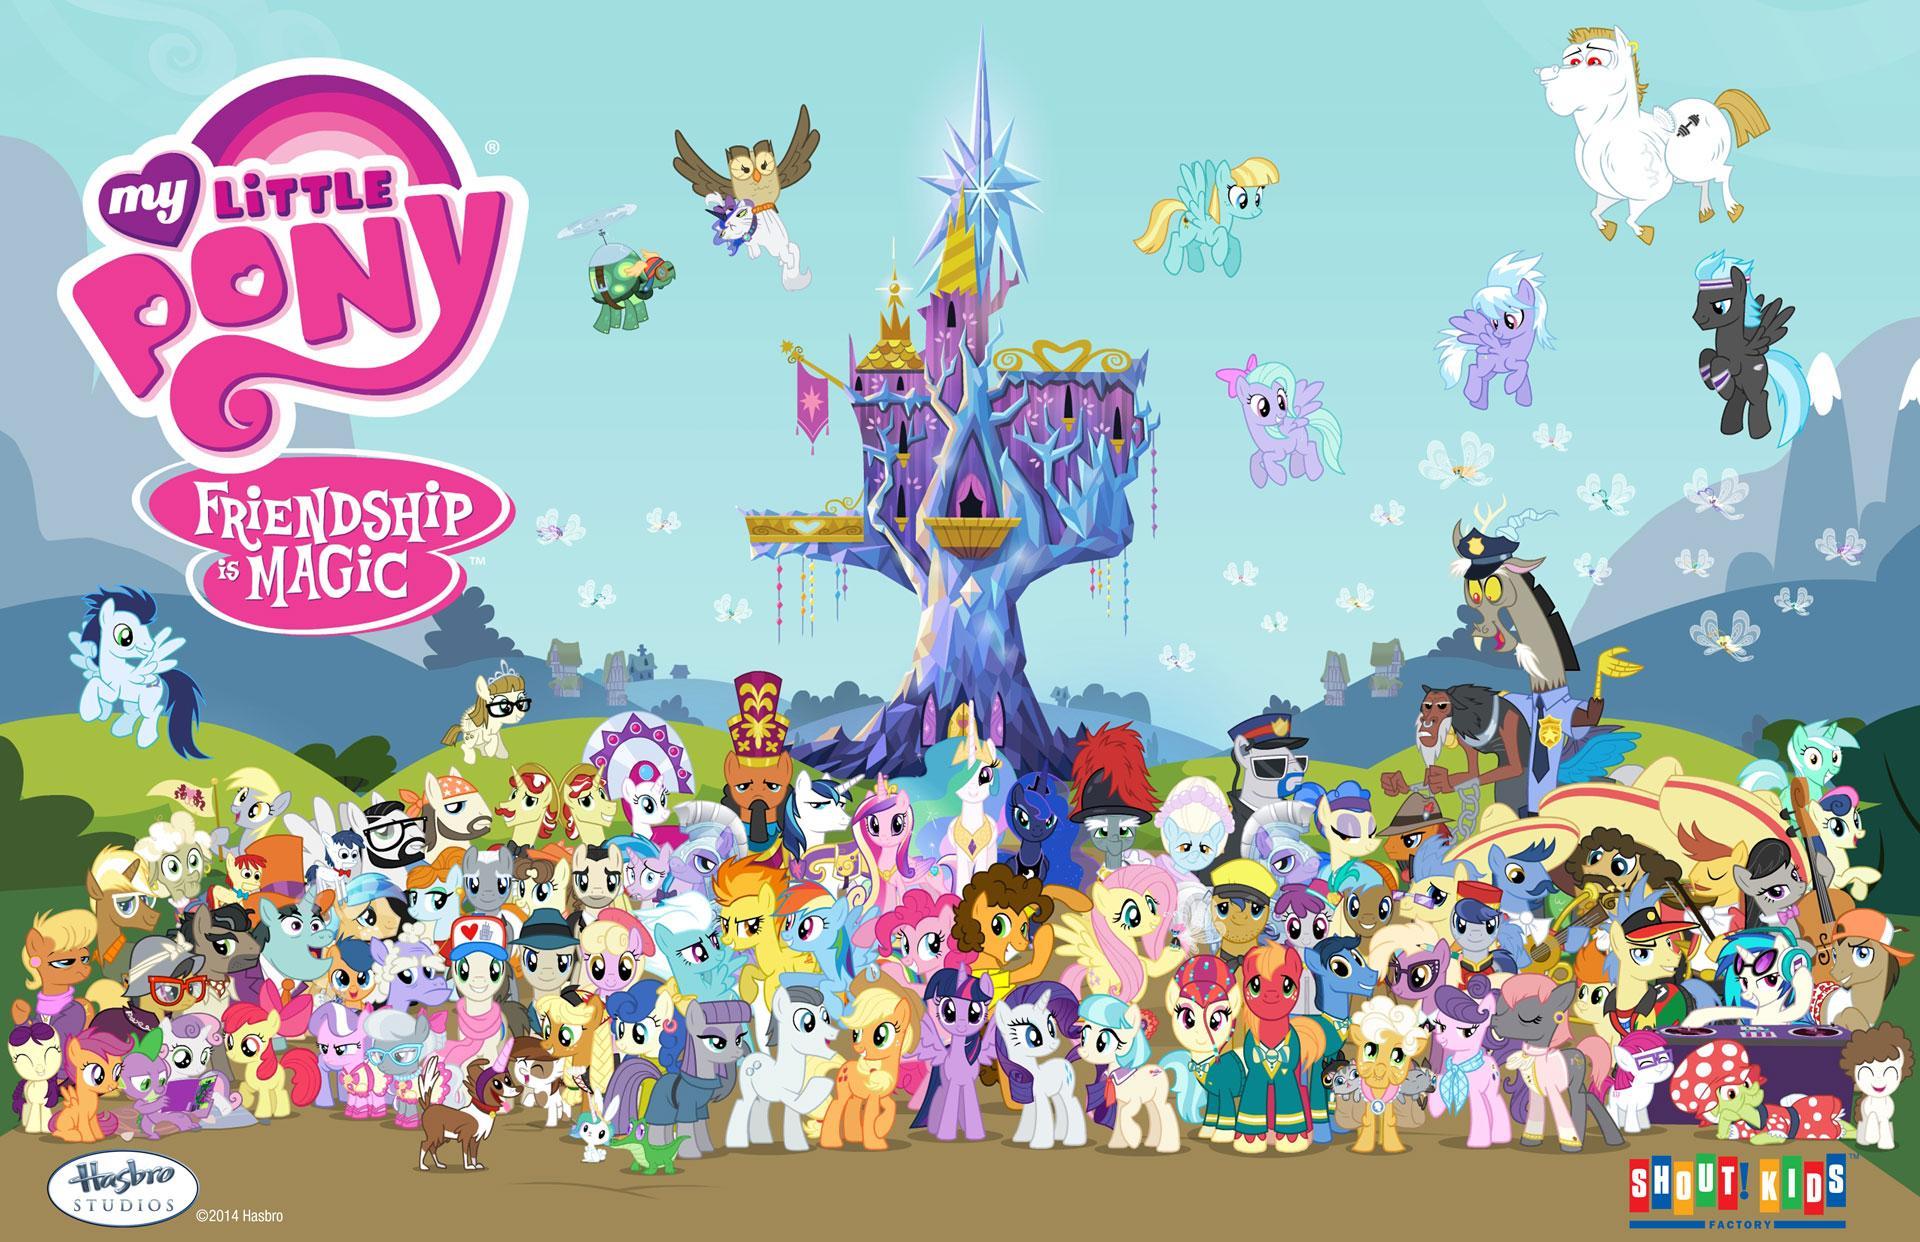 My Little Pony: Friendship is Magic - wide 6